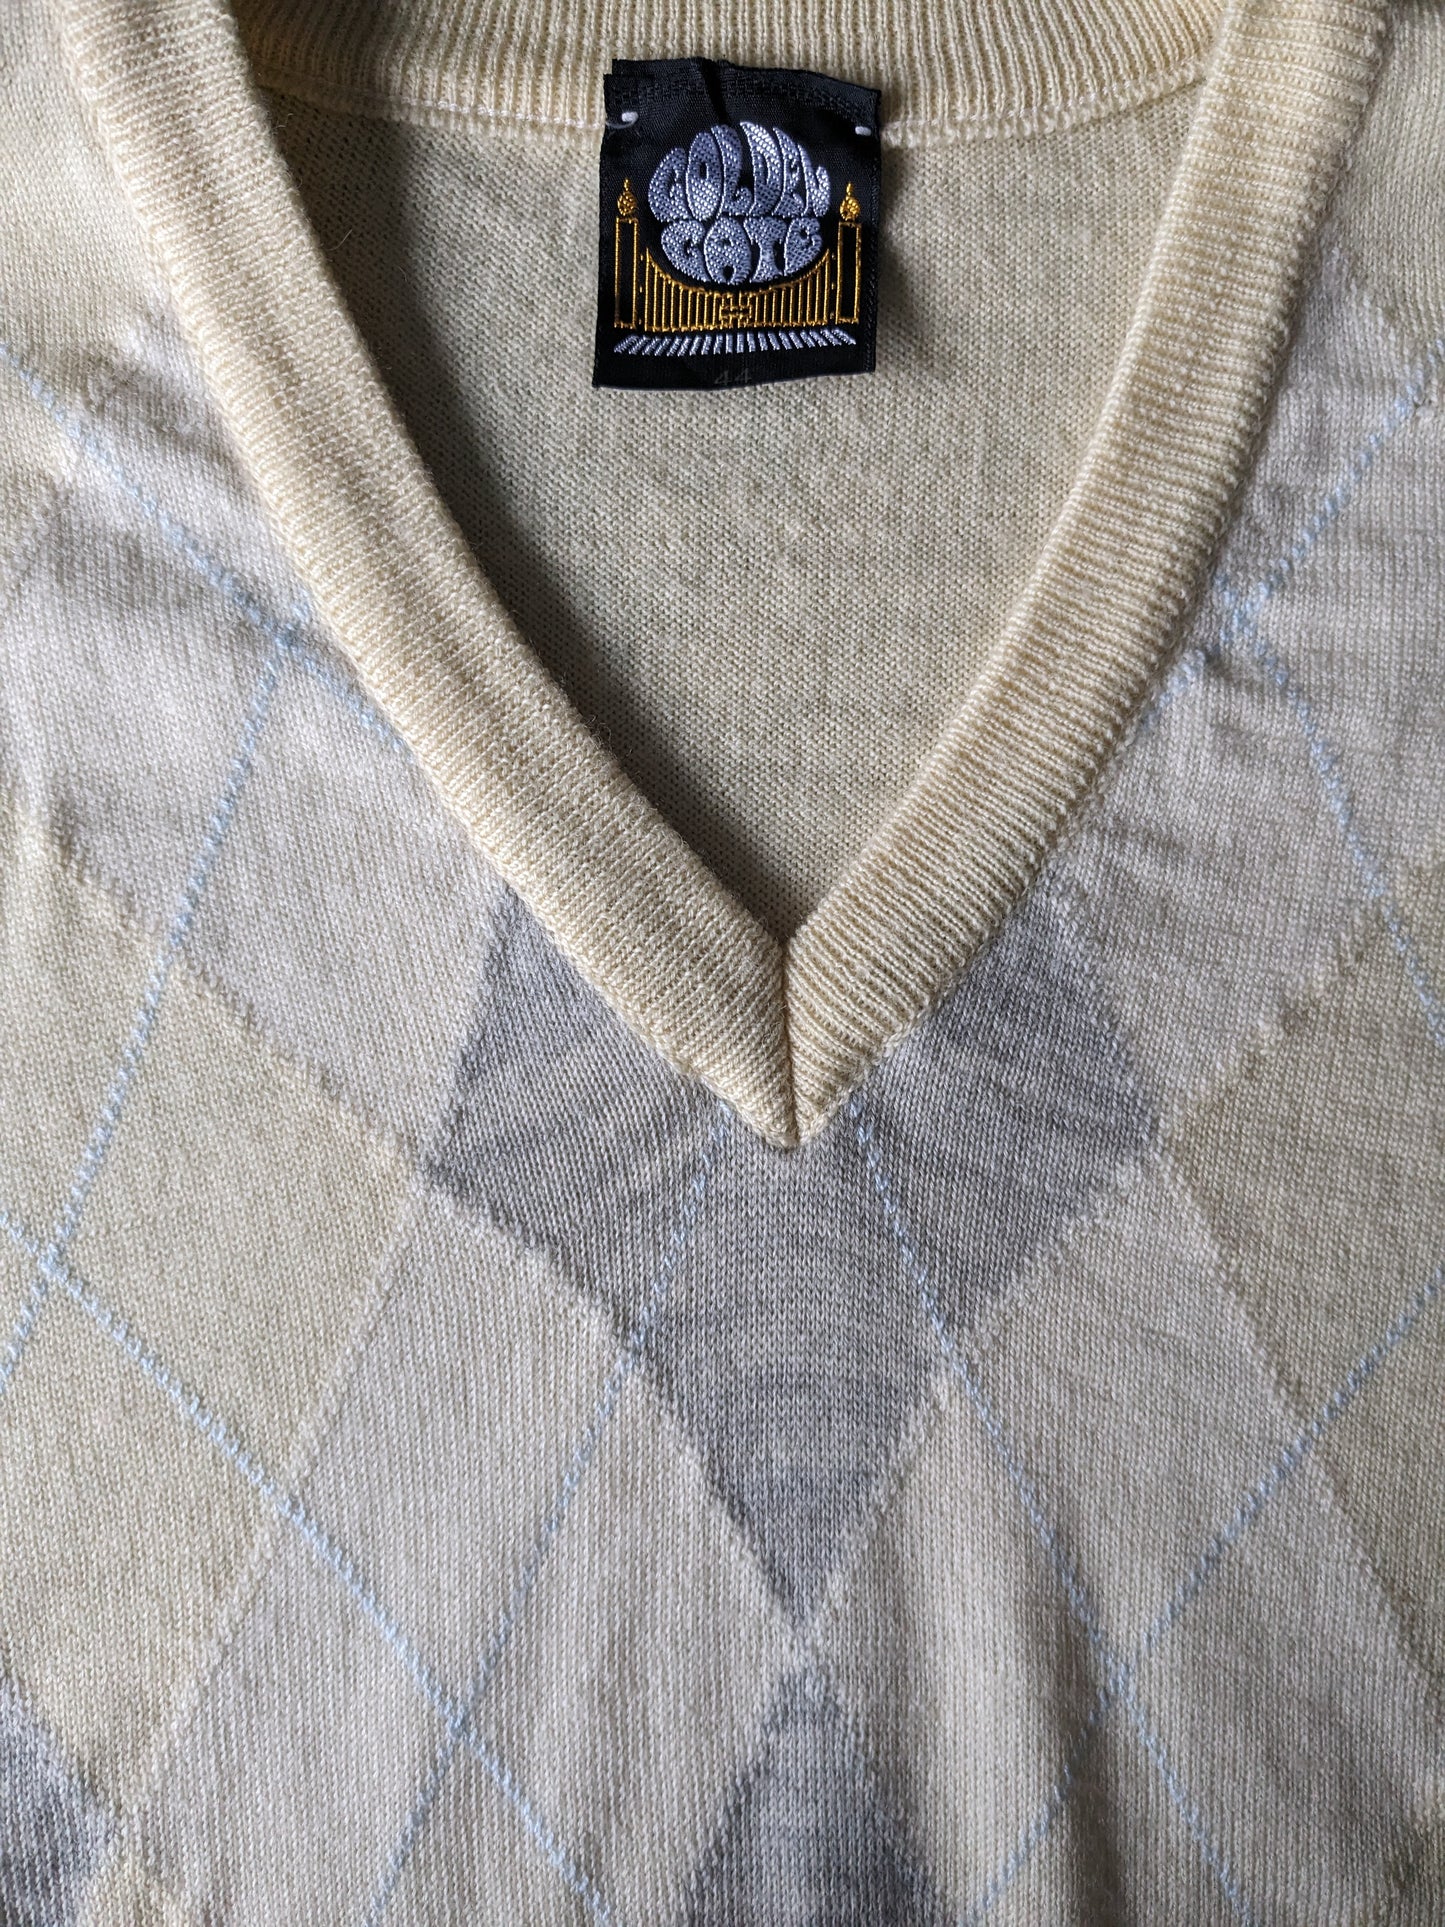 Spencer di lana d'oro d'oro vintage. Motivo Argyle grigio blu giallo. Taglia L.